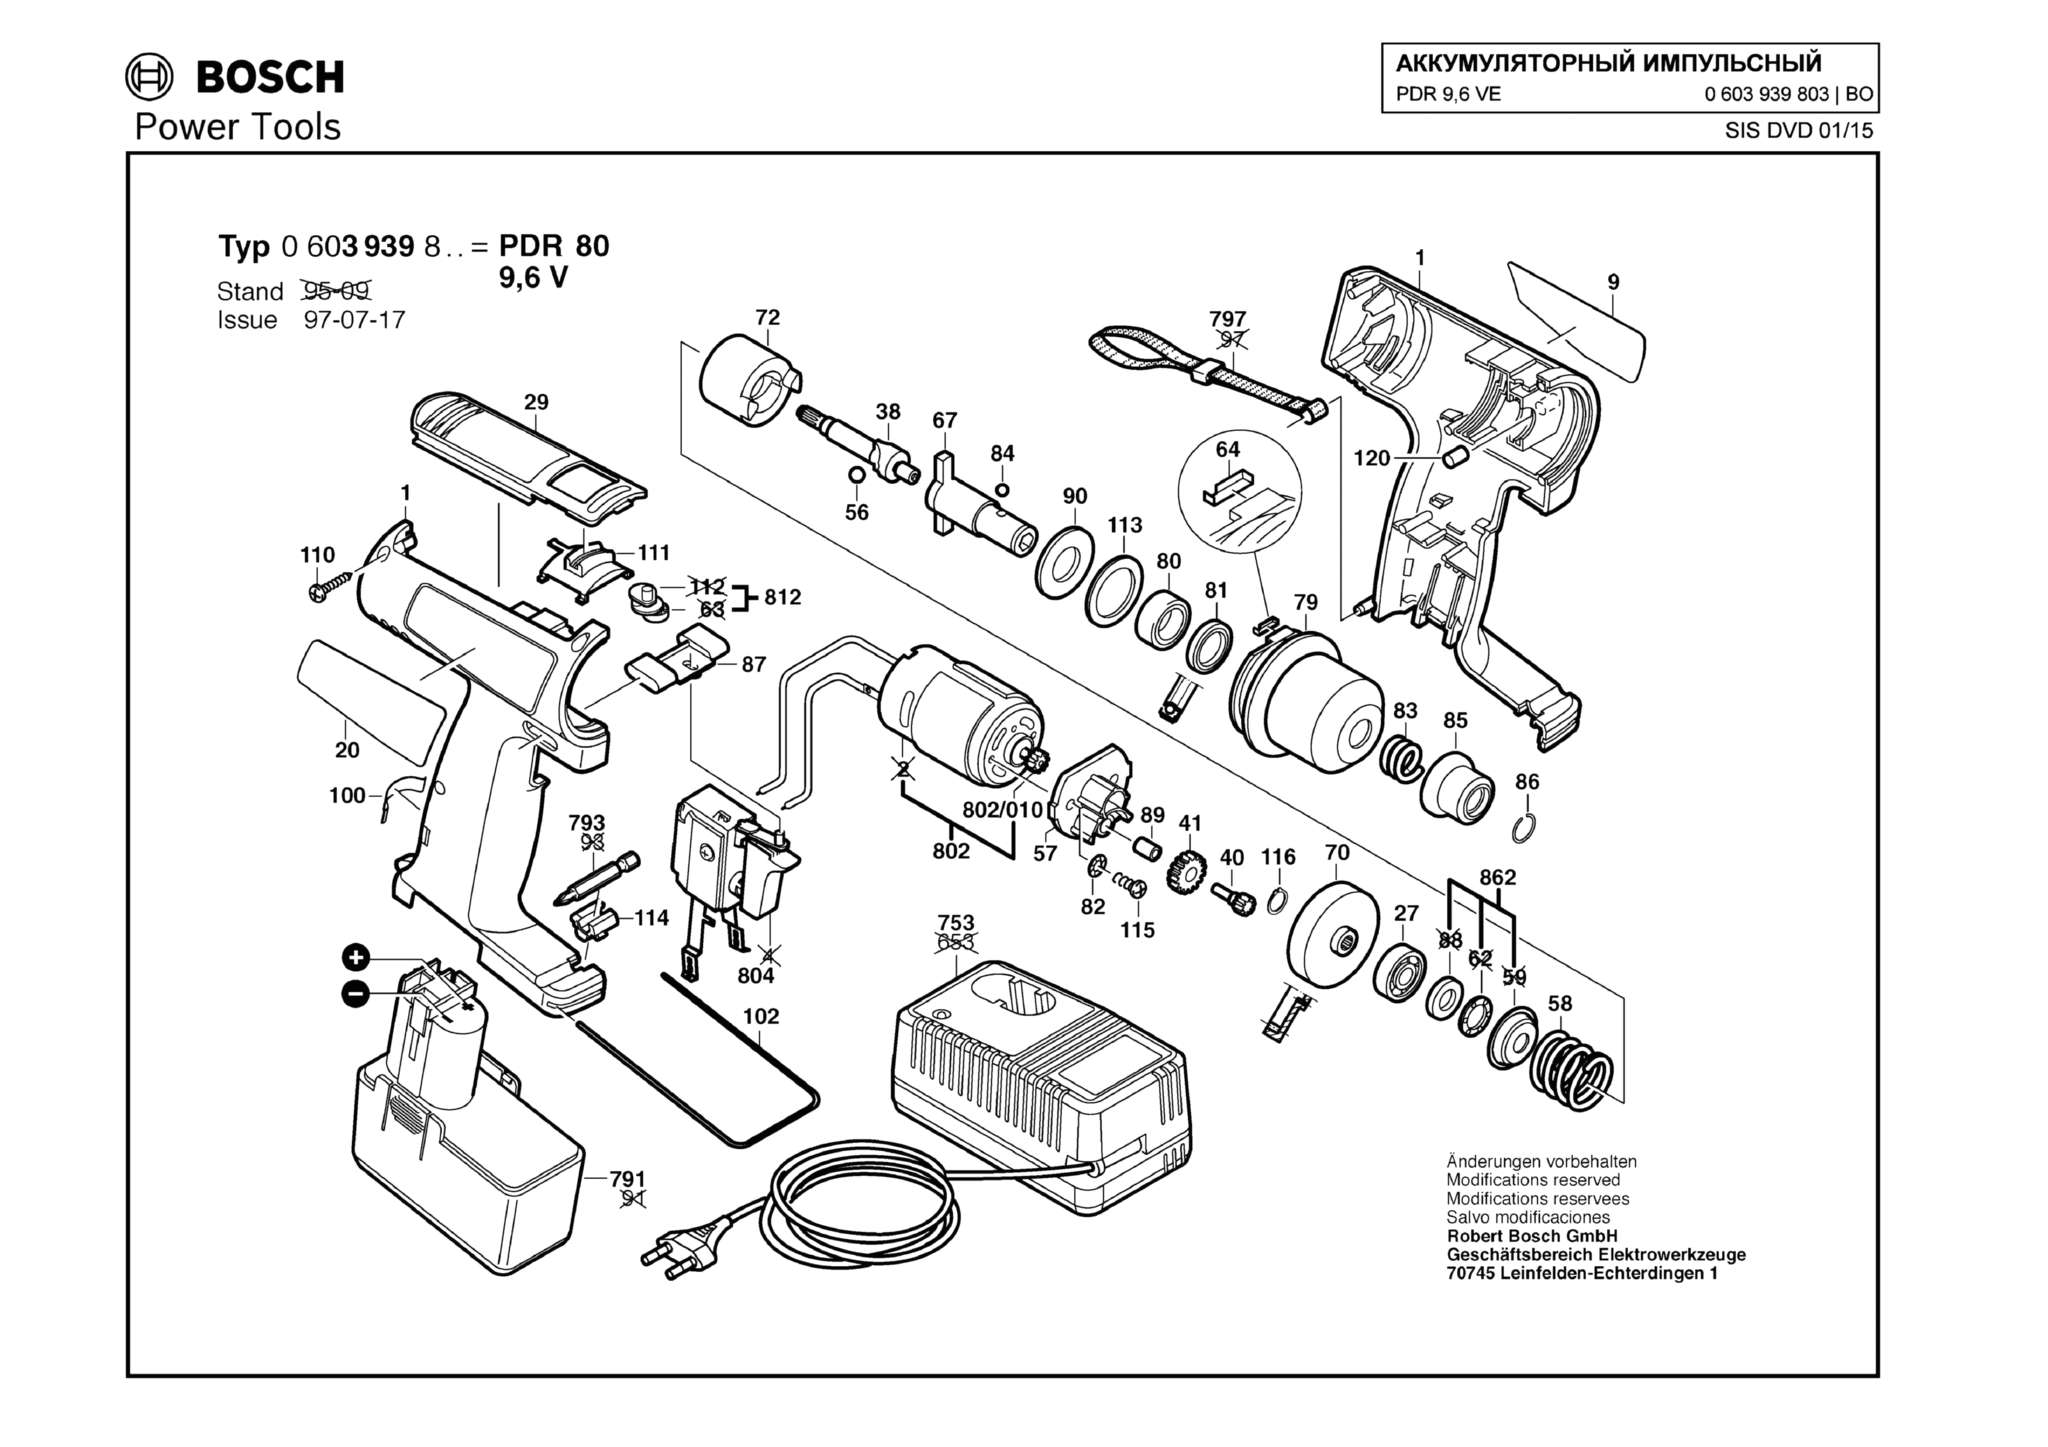 Запчасти, схема и деталировка Bosch PDR 9,6 VE (ТИП 0603939803)